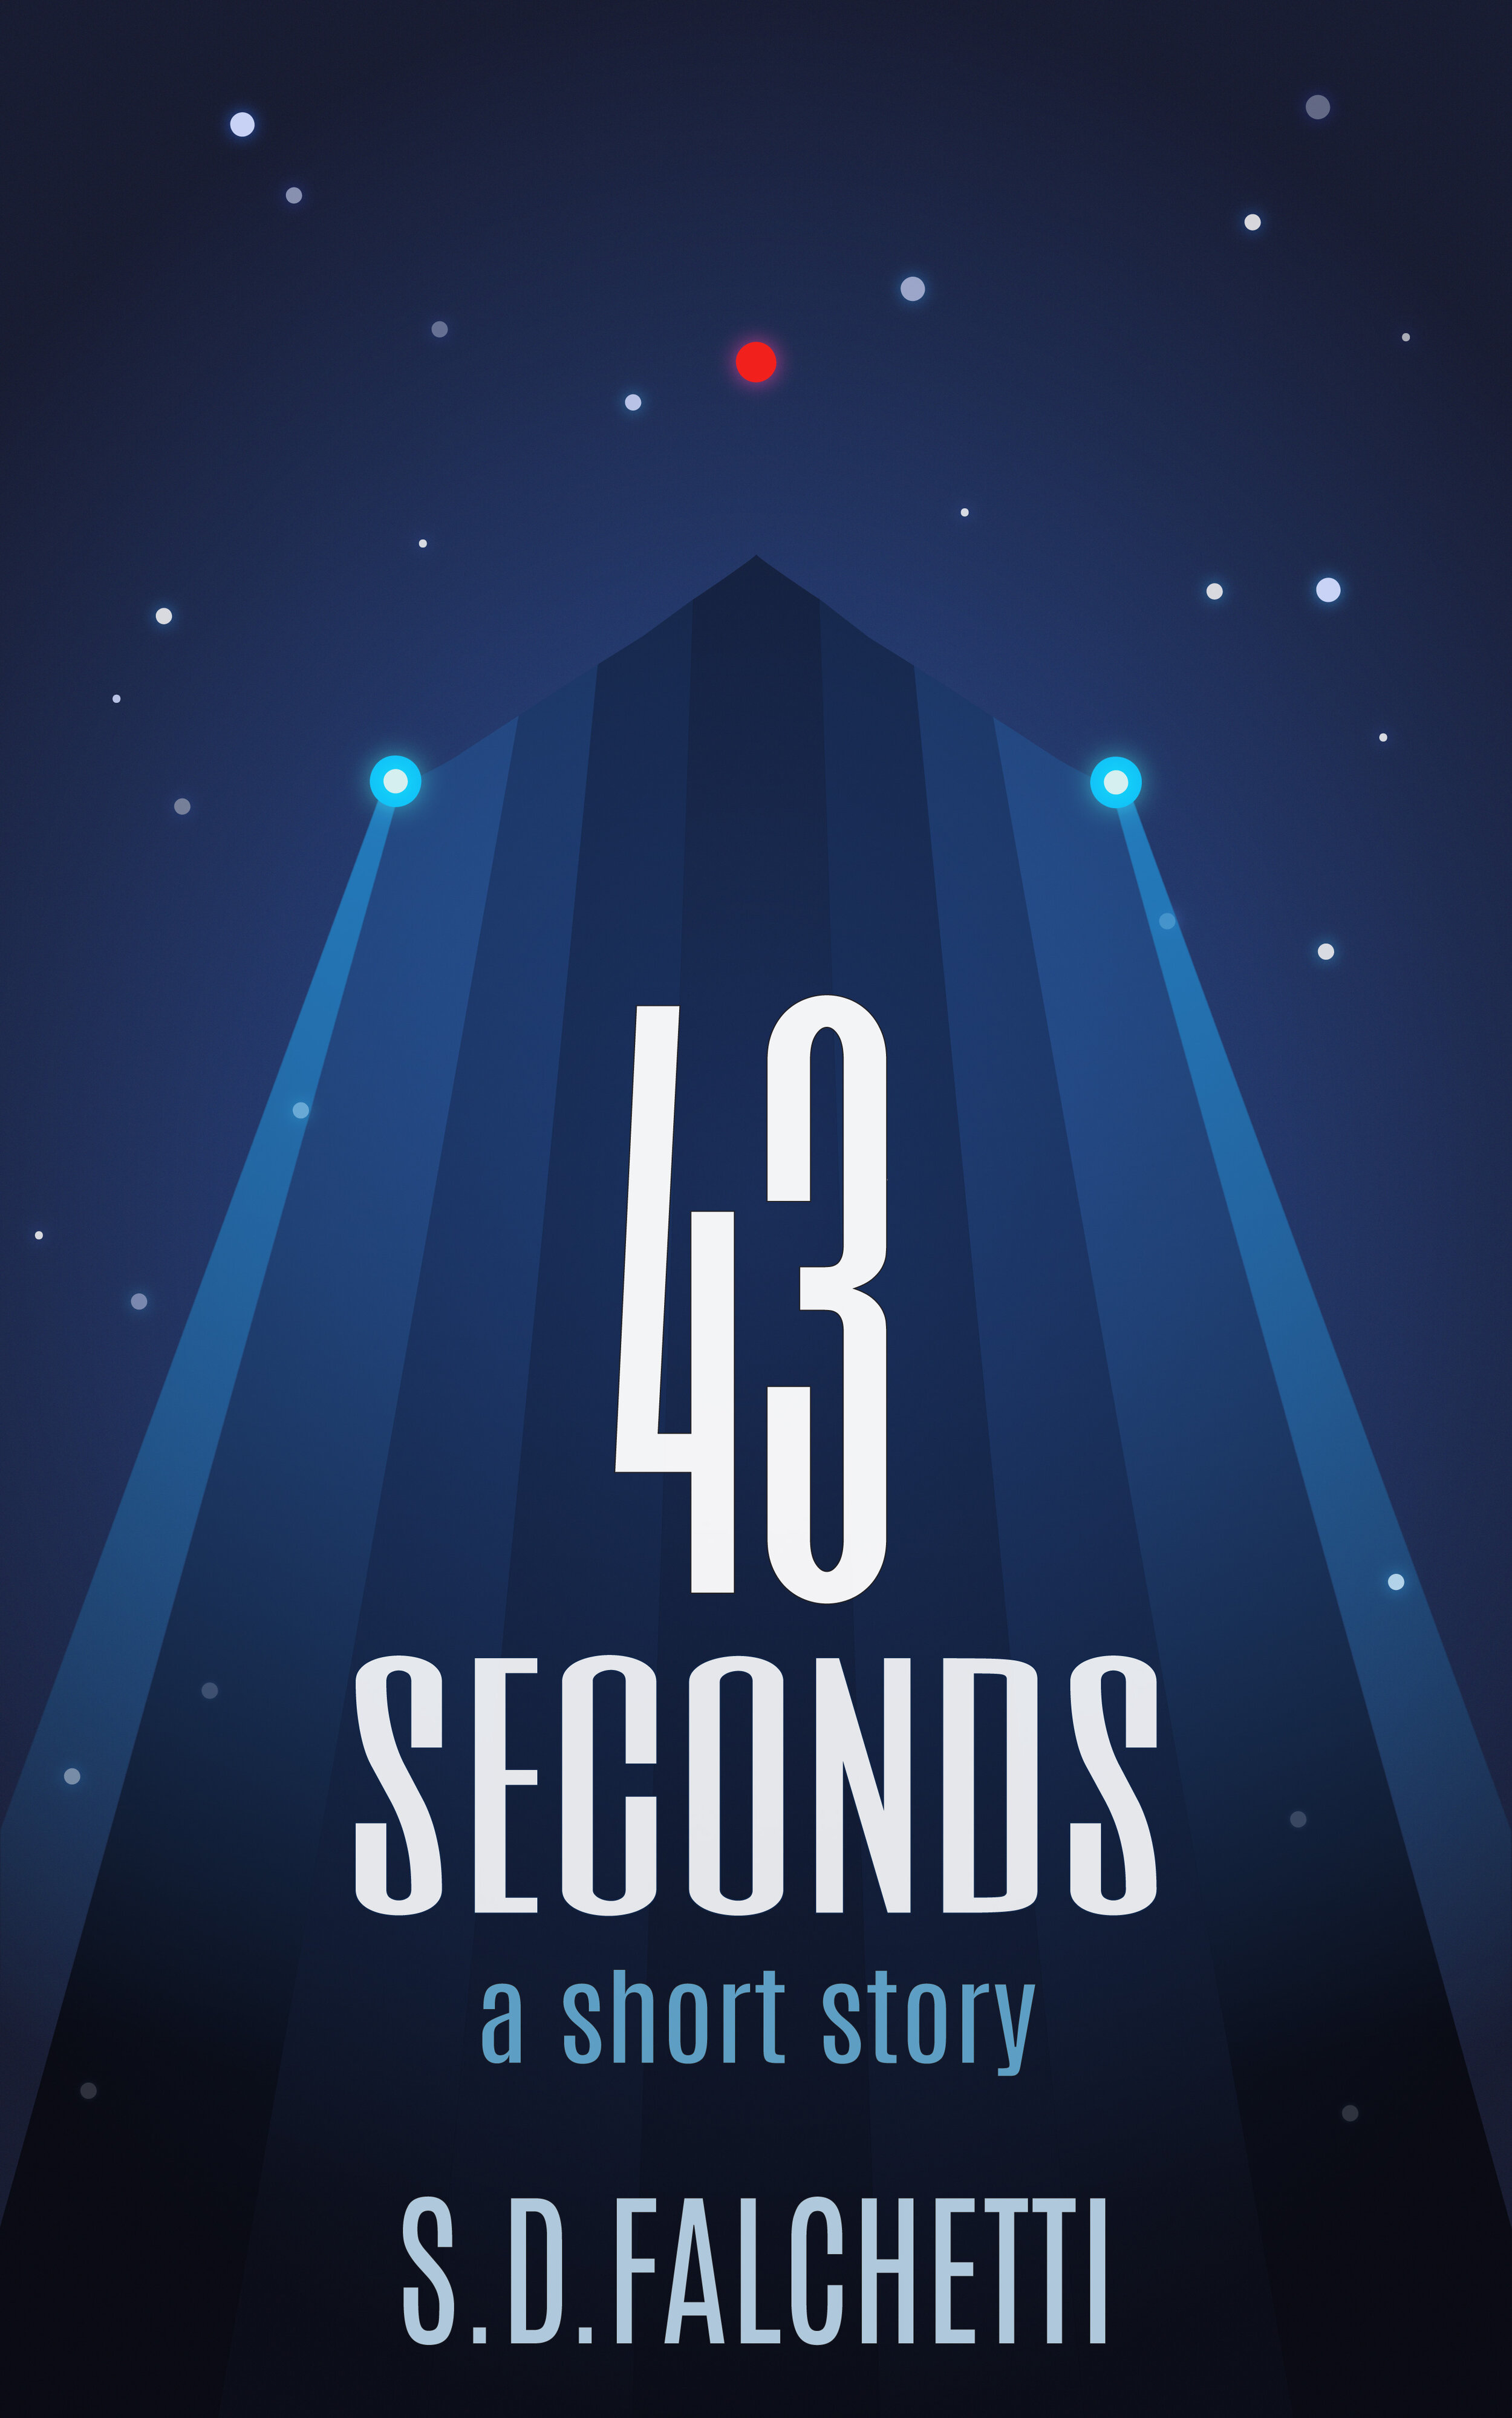 43 Seconds Cover - Illustrator.jpg